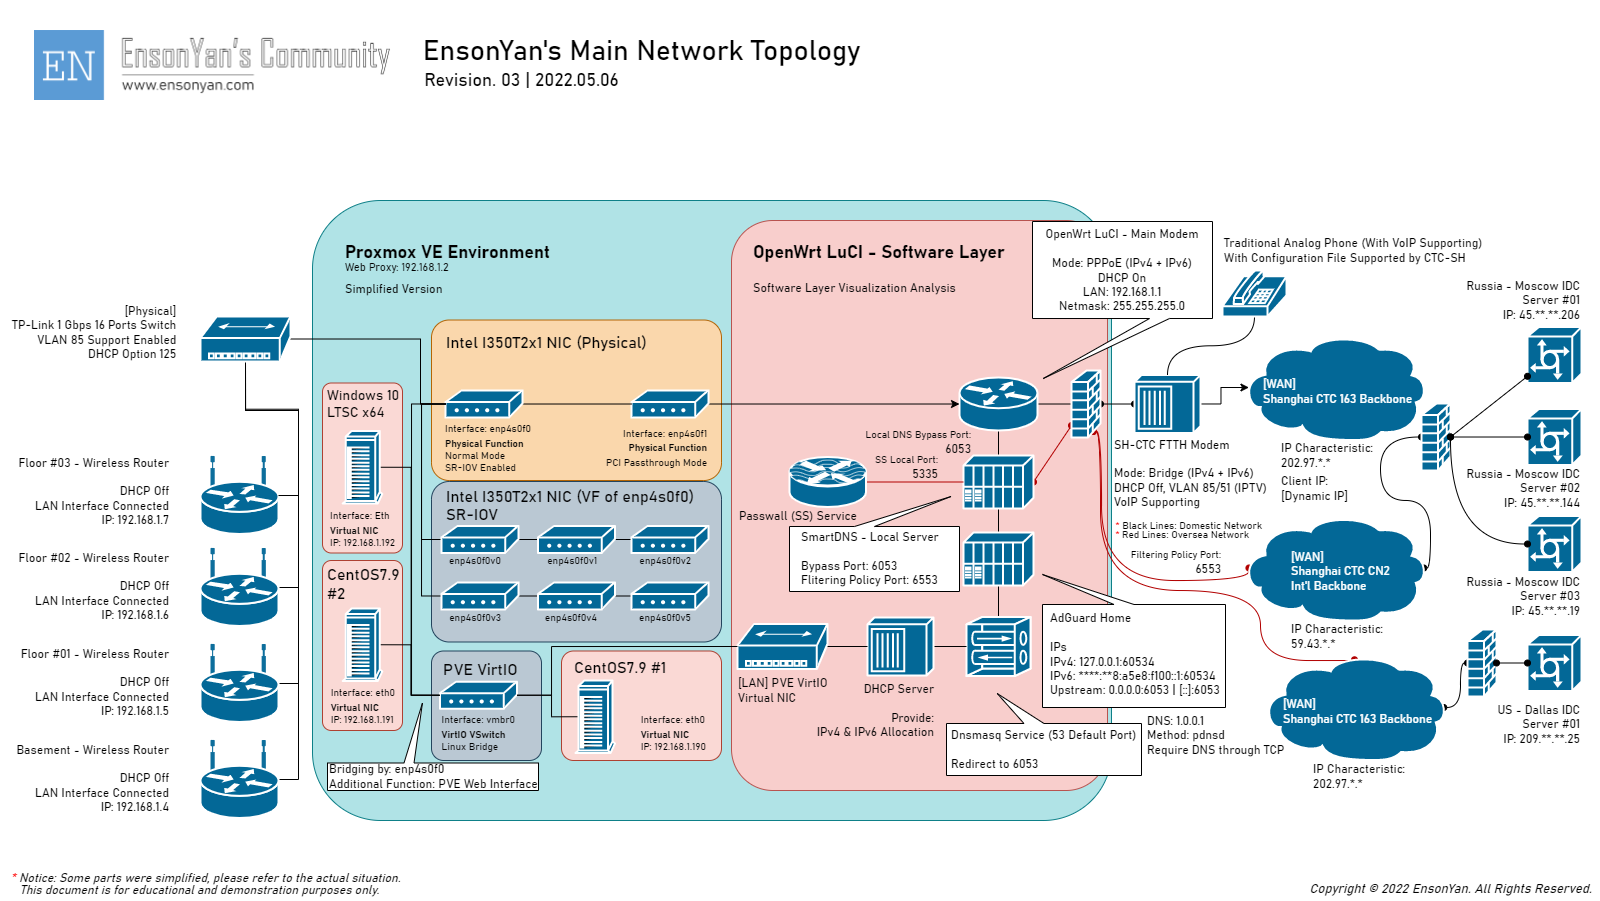 EnsonYan - Main Network Topology - 2022